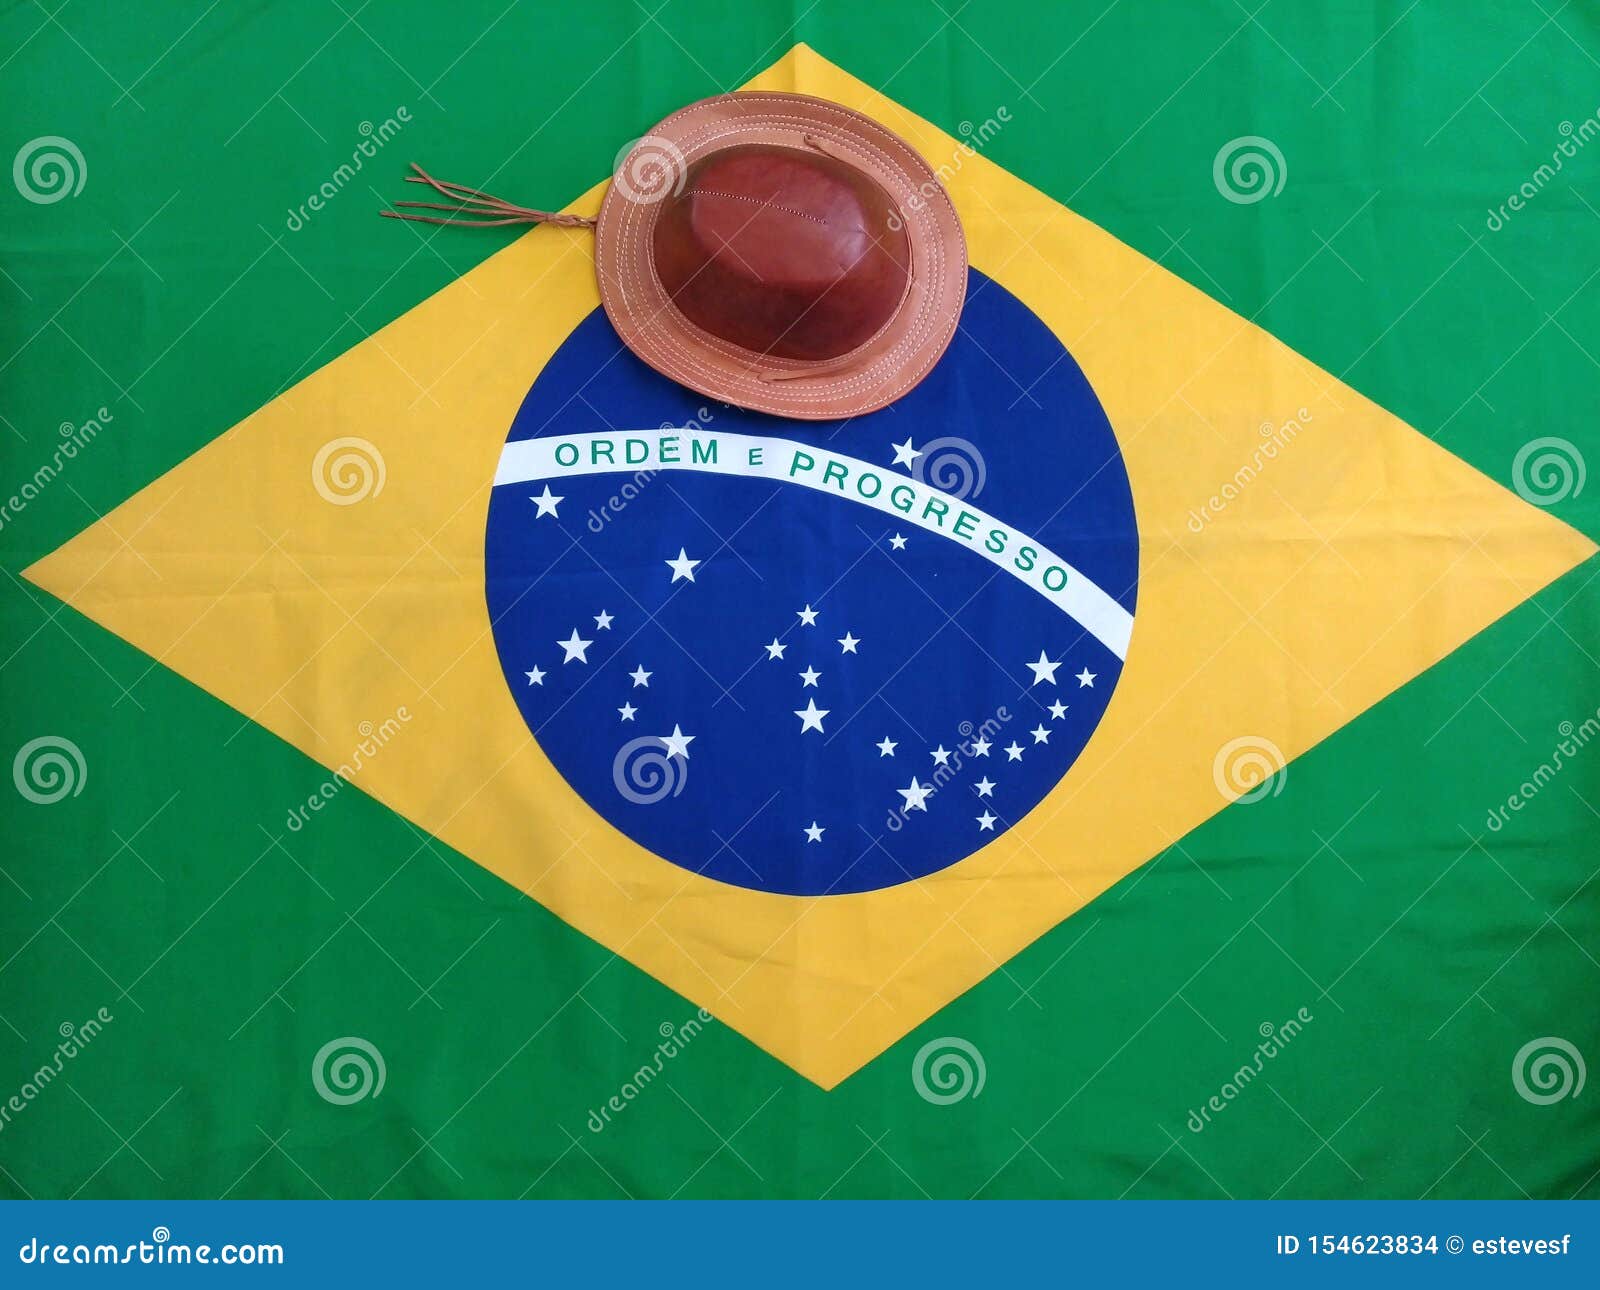 Bandeira do país ficcional República Popular do Nordeste Sul-Americano :  r/BrasildoB